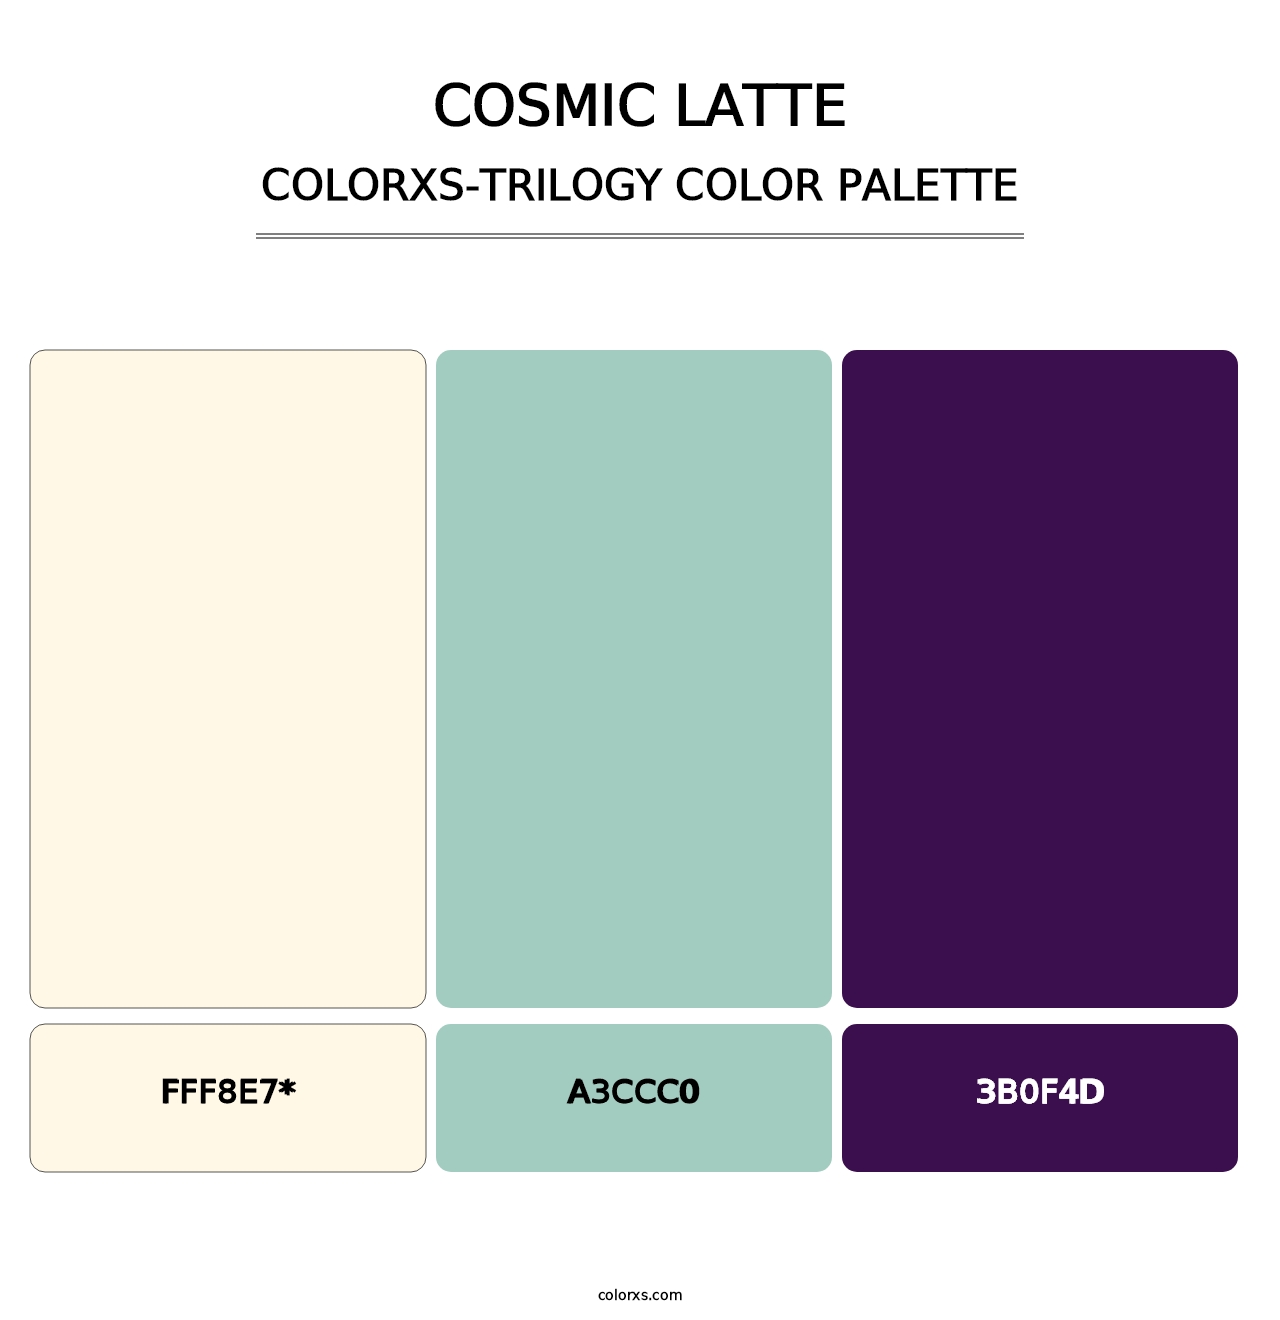 Cosmic Latte - Colorxs Trilogy Palette